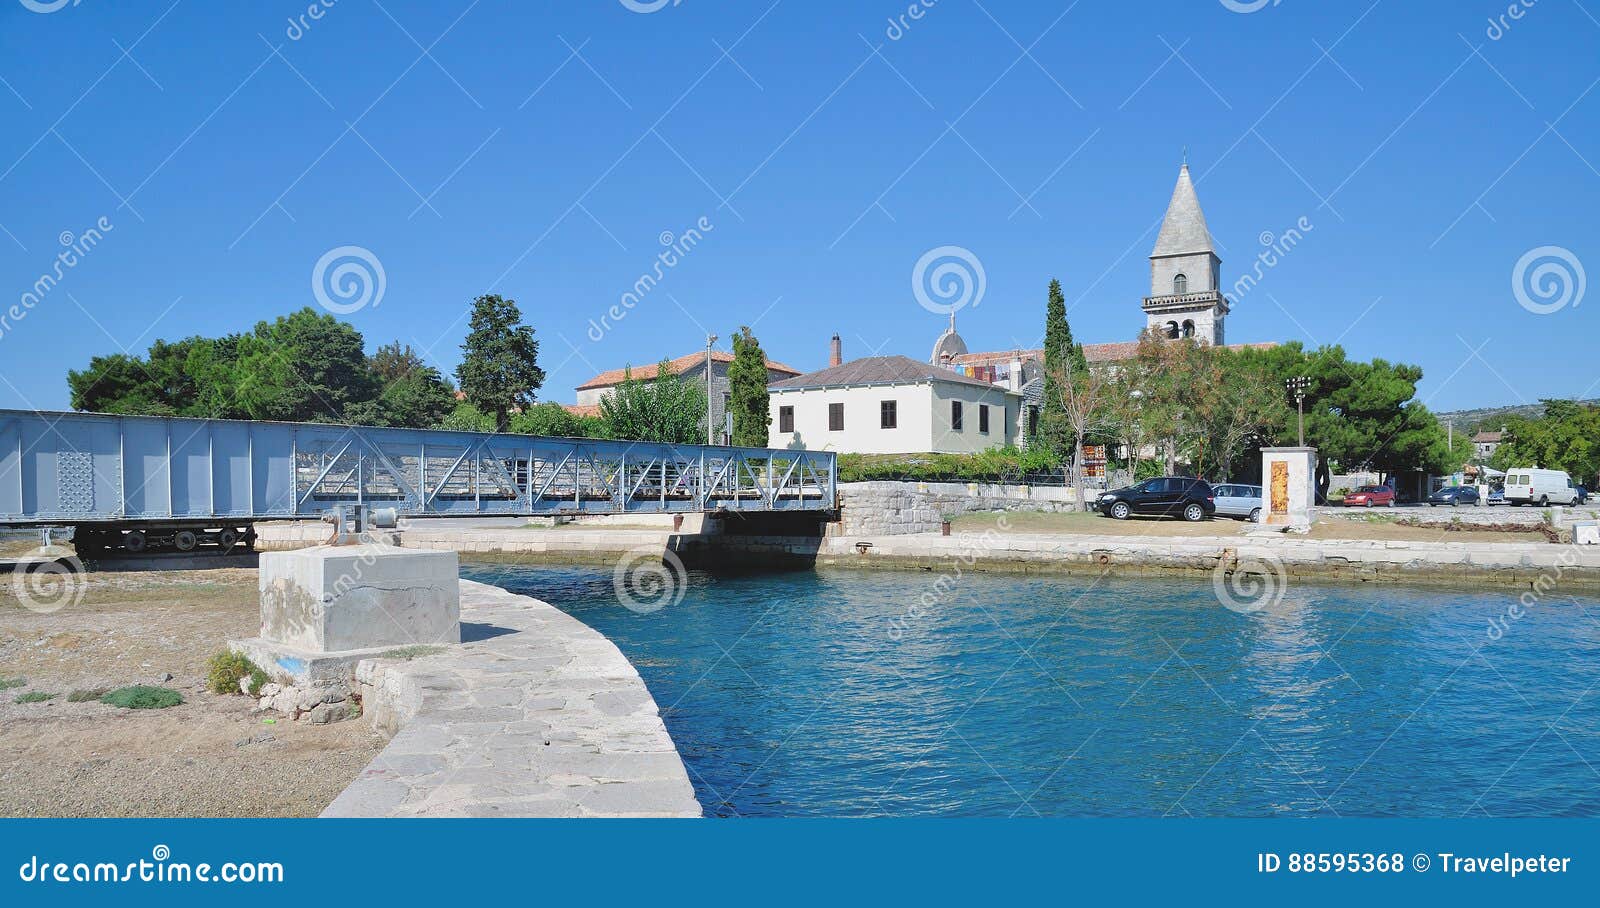 osor,cres island,adriatic sea,kvarner,croatia